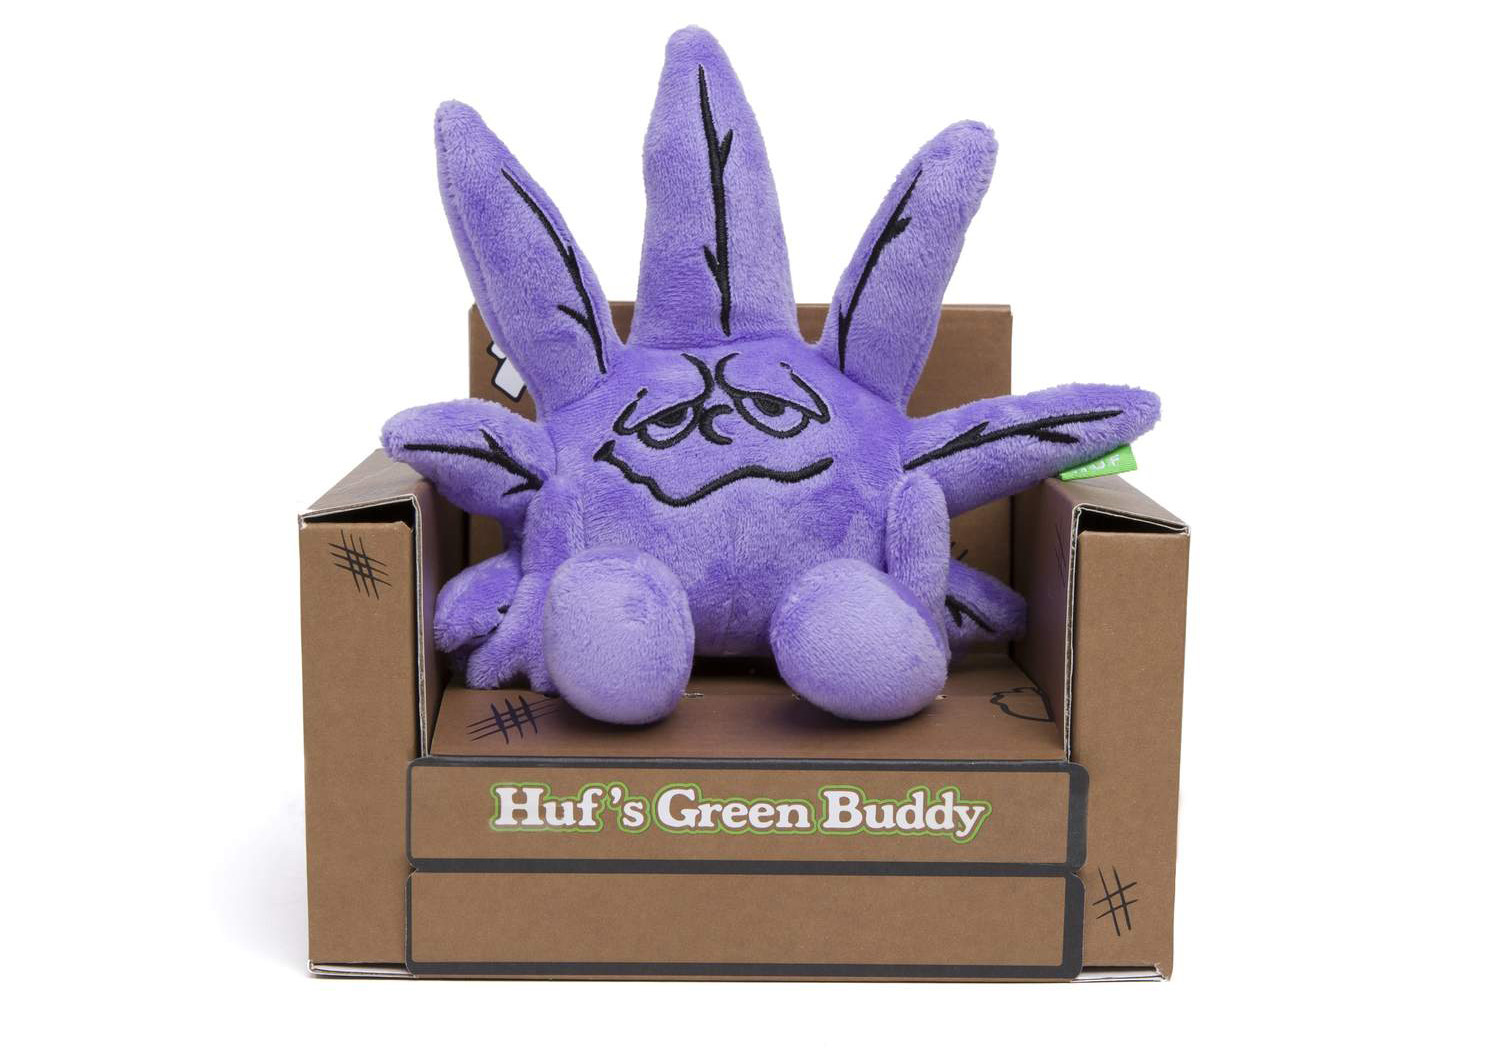 HUF Green Buddy Plush Doll Green - US